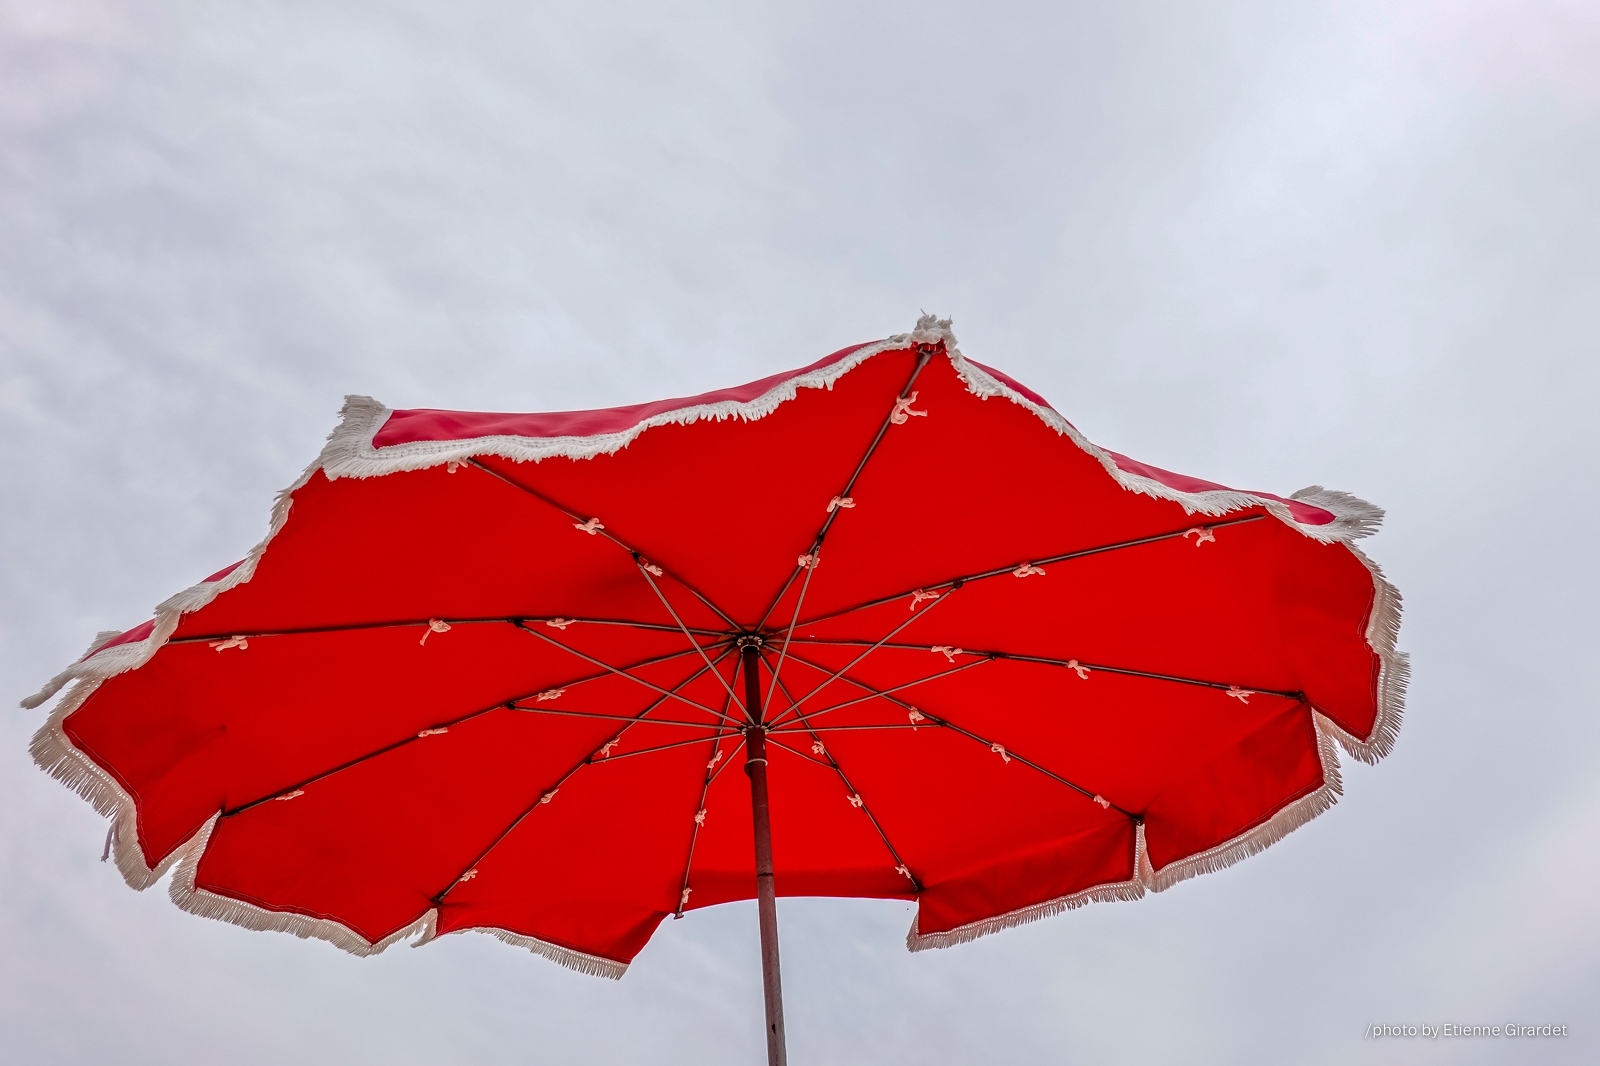 201810_25_RXX1849-red-sunshade-umbrella-beach-by-E-Girardet.jpg